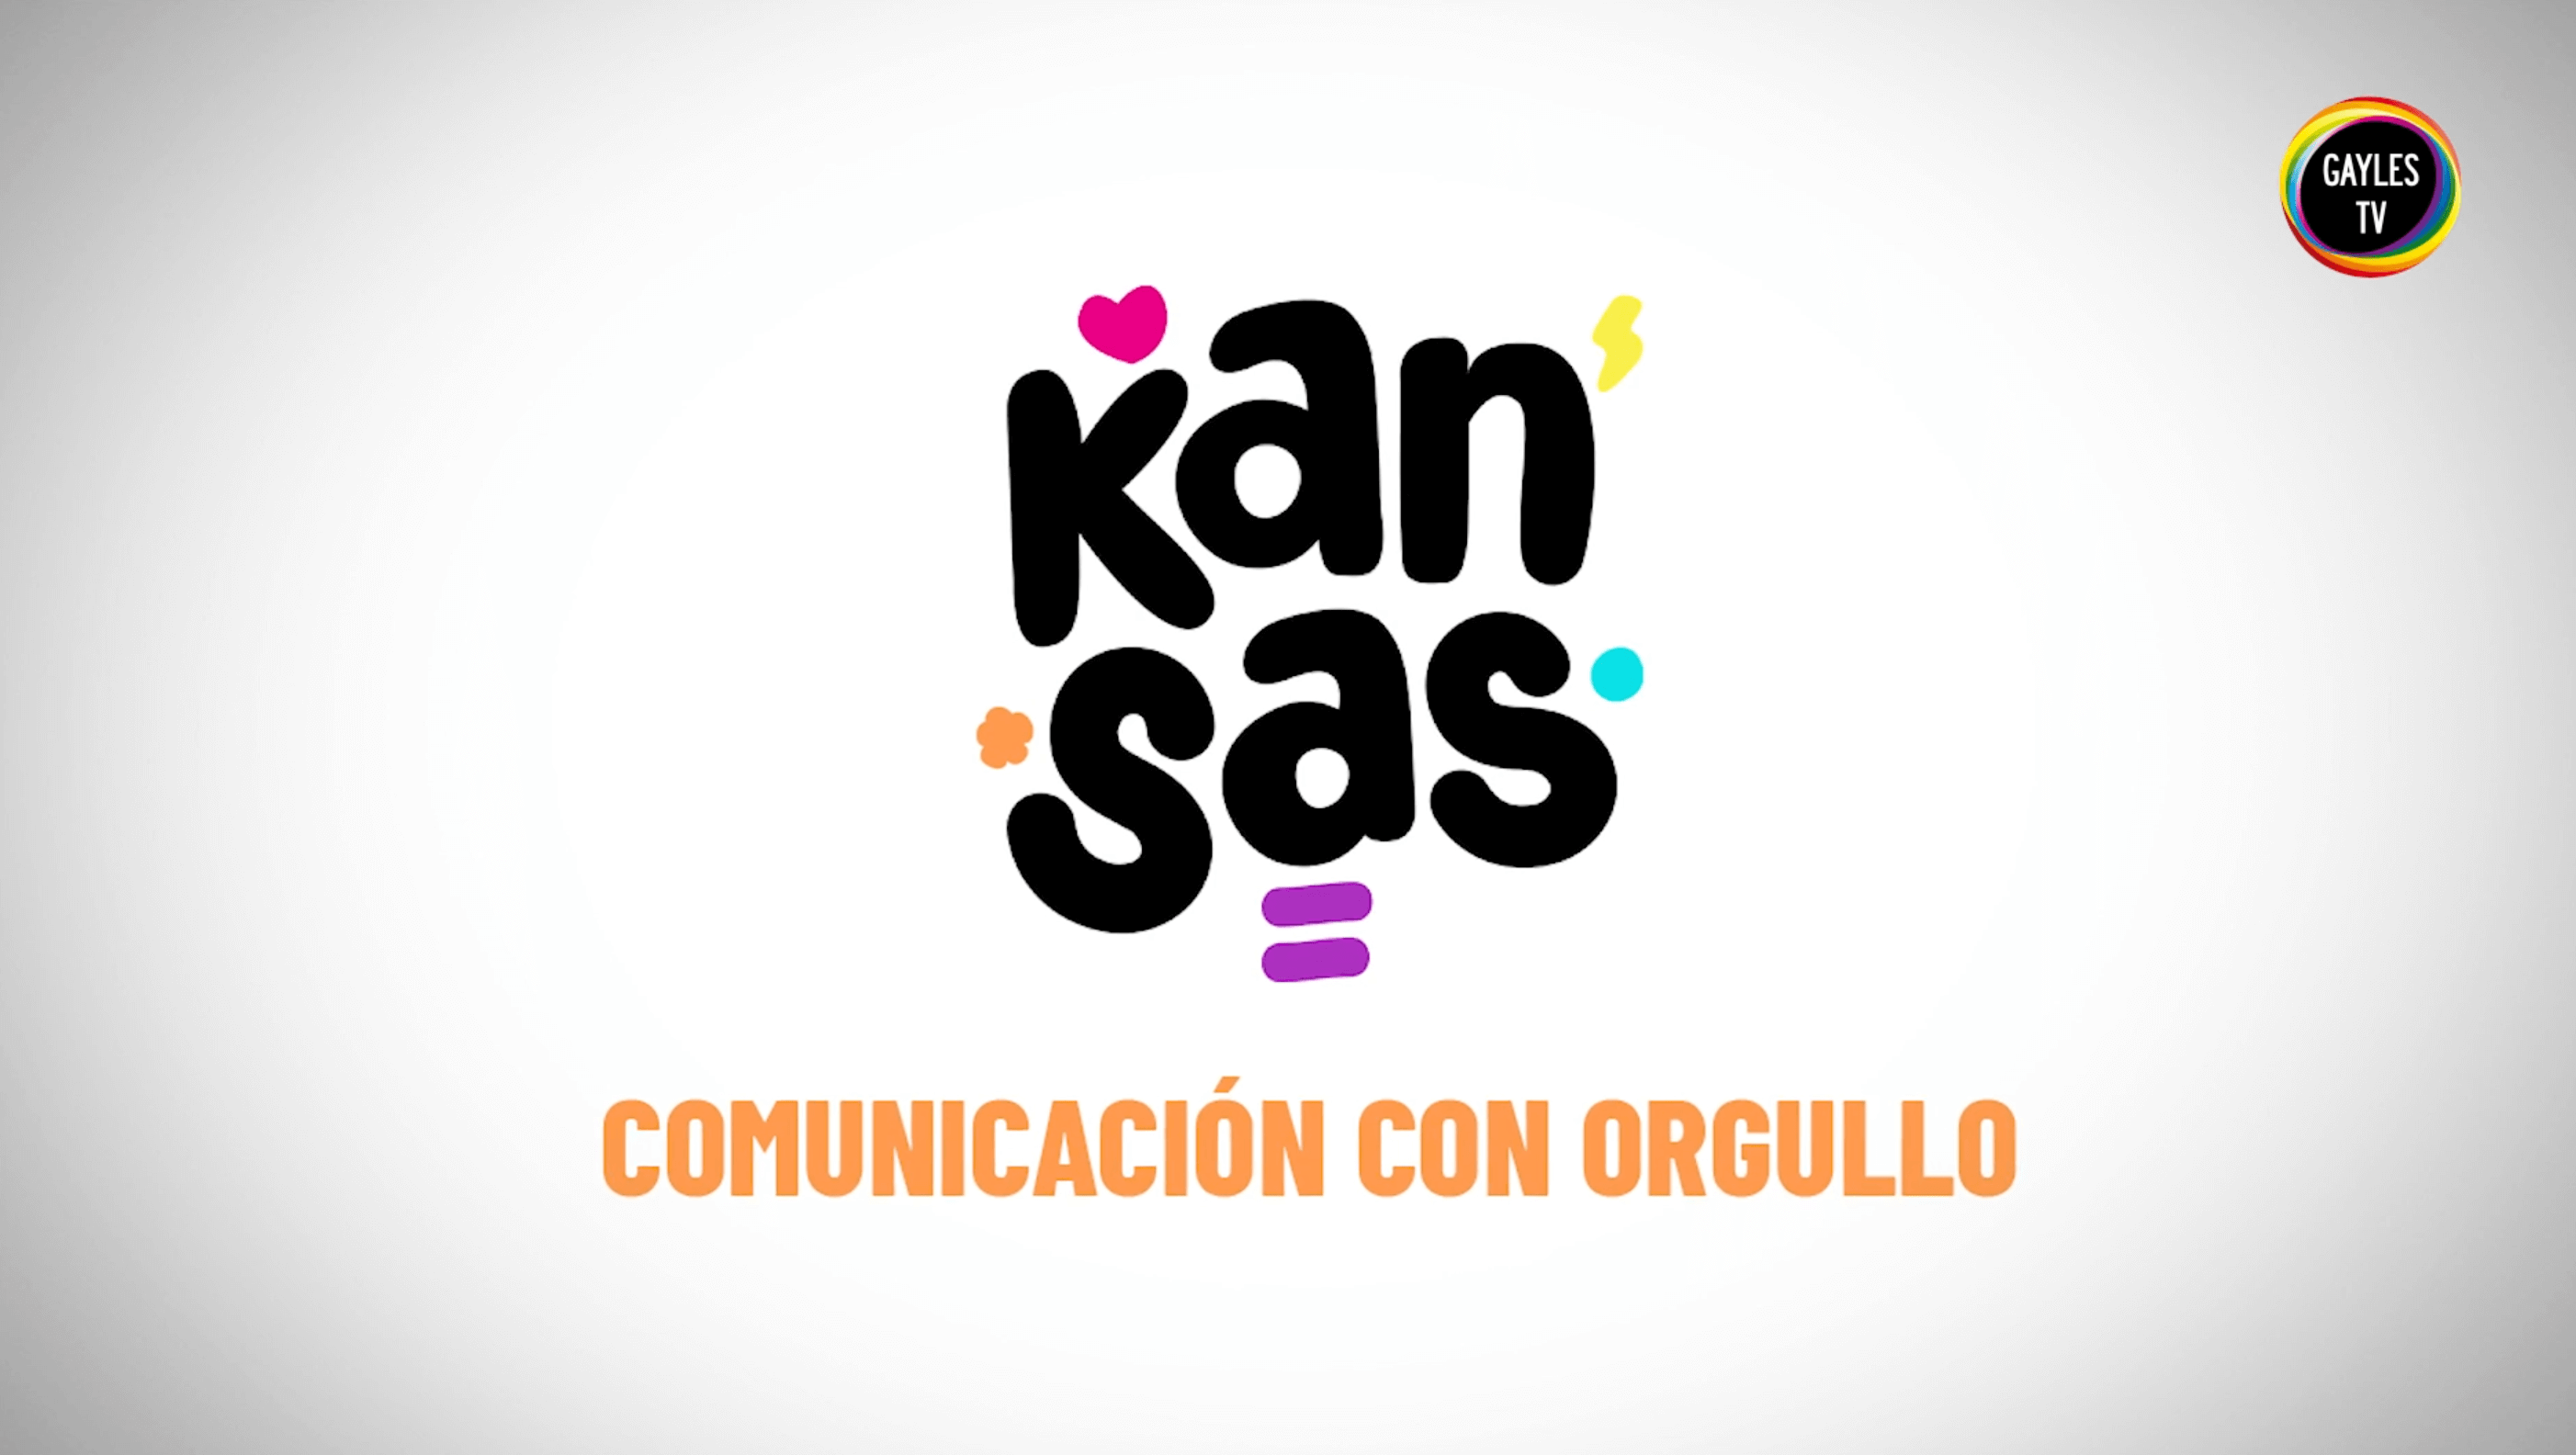 KANSAS, communication with pride